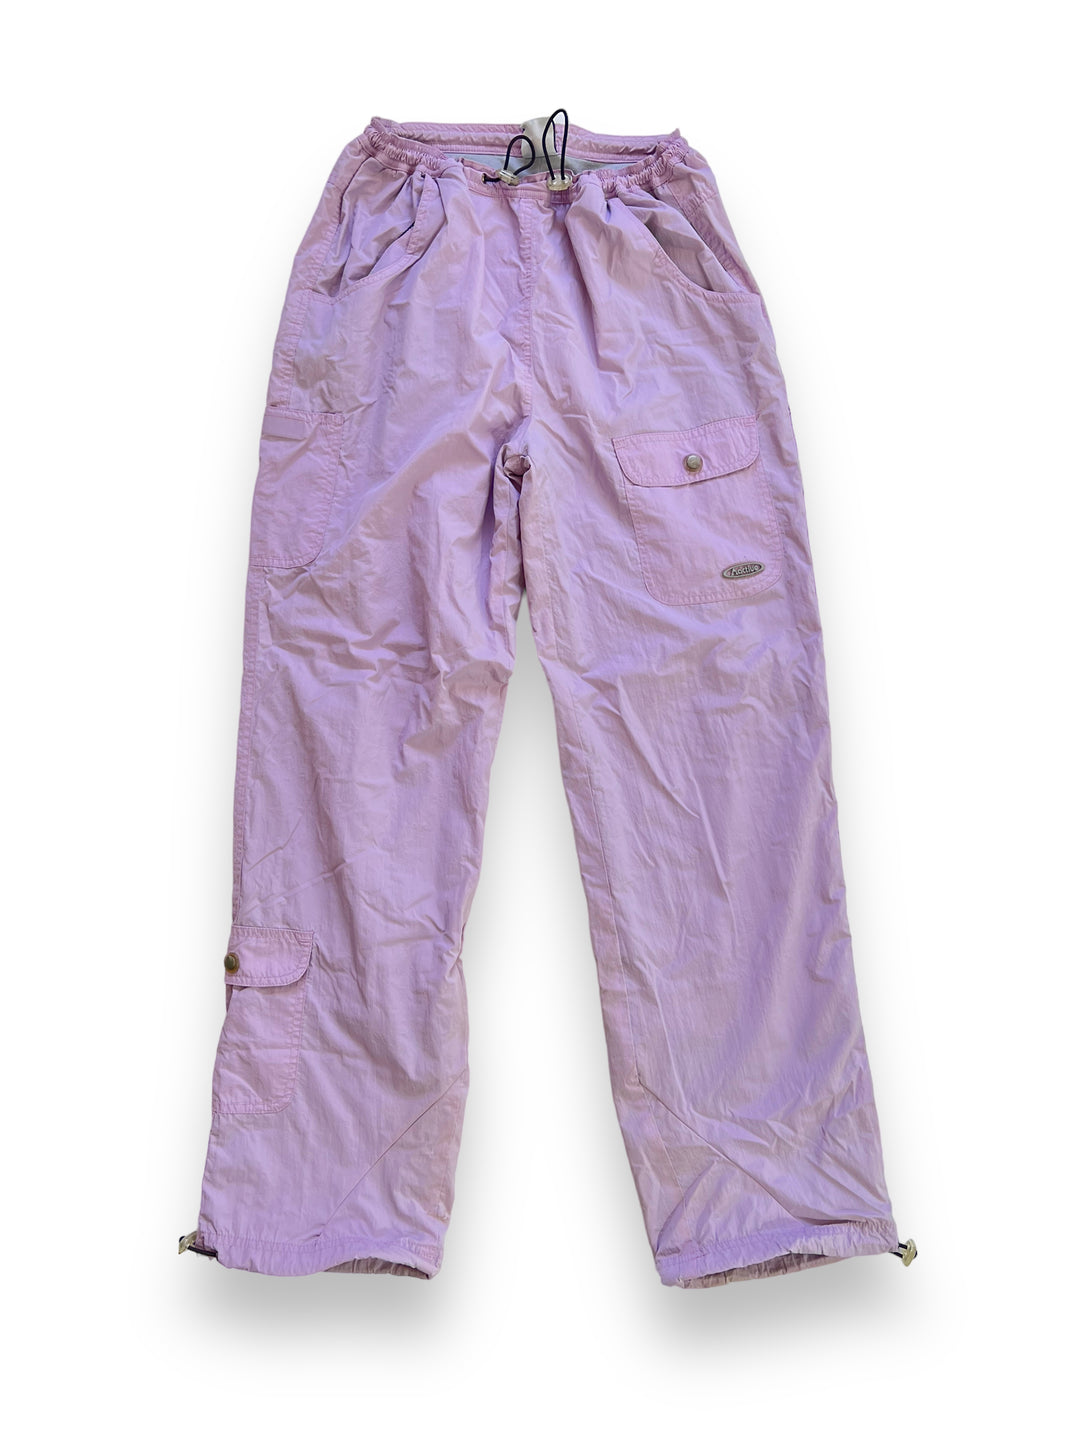 Vintage Nylon Sweatpants Women's Medium